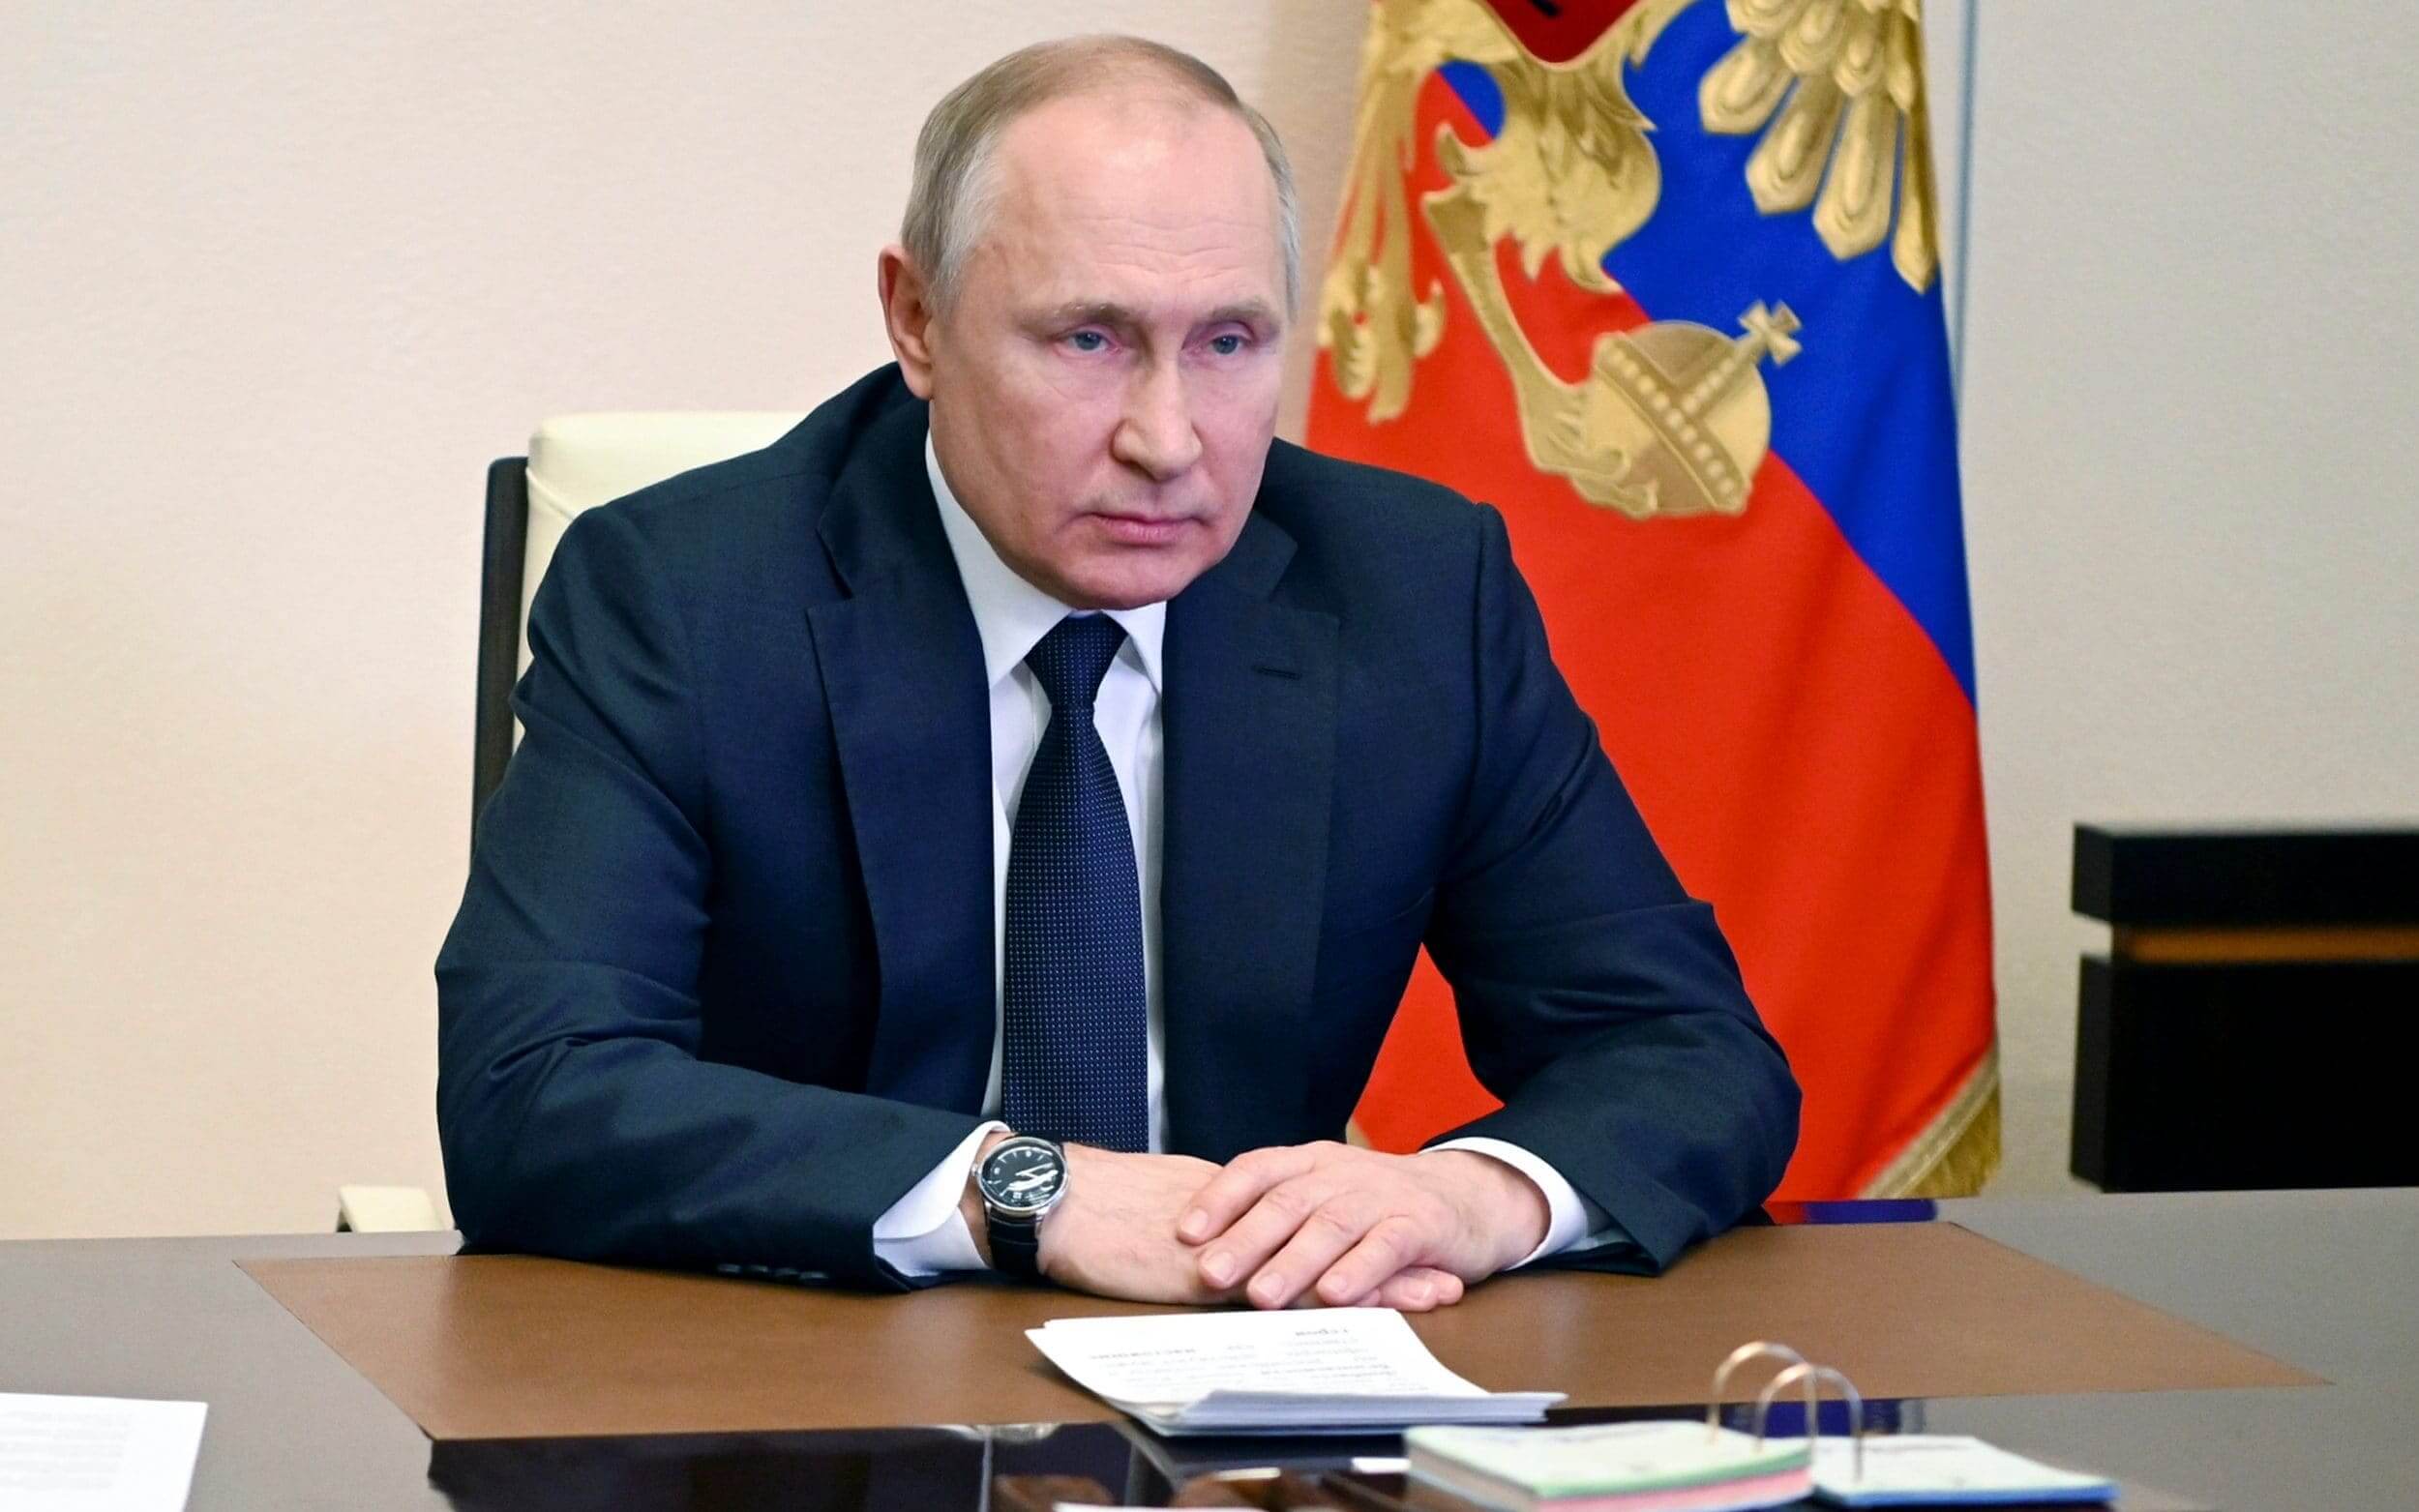 russianpresidentvladimirputinis"veryill"sufferingfrombloodcancer:reports